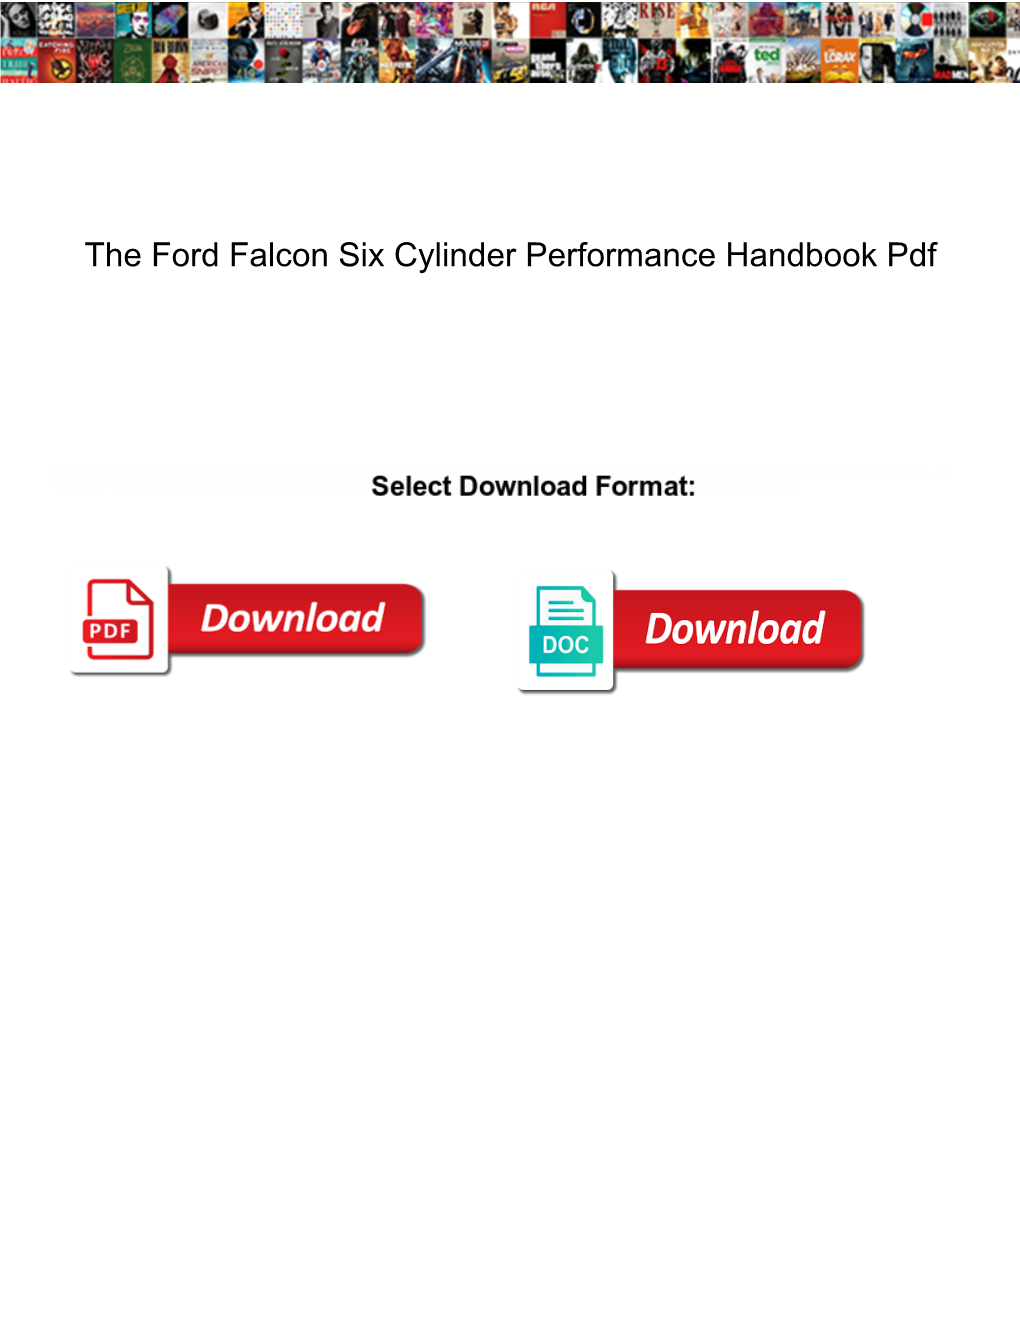 The Ford Falcon Six Cylinder Performance Handbook Pdf